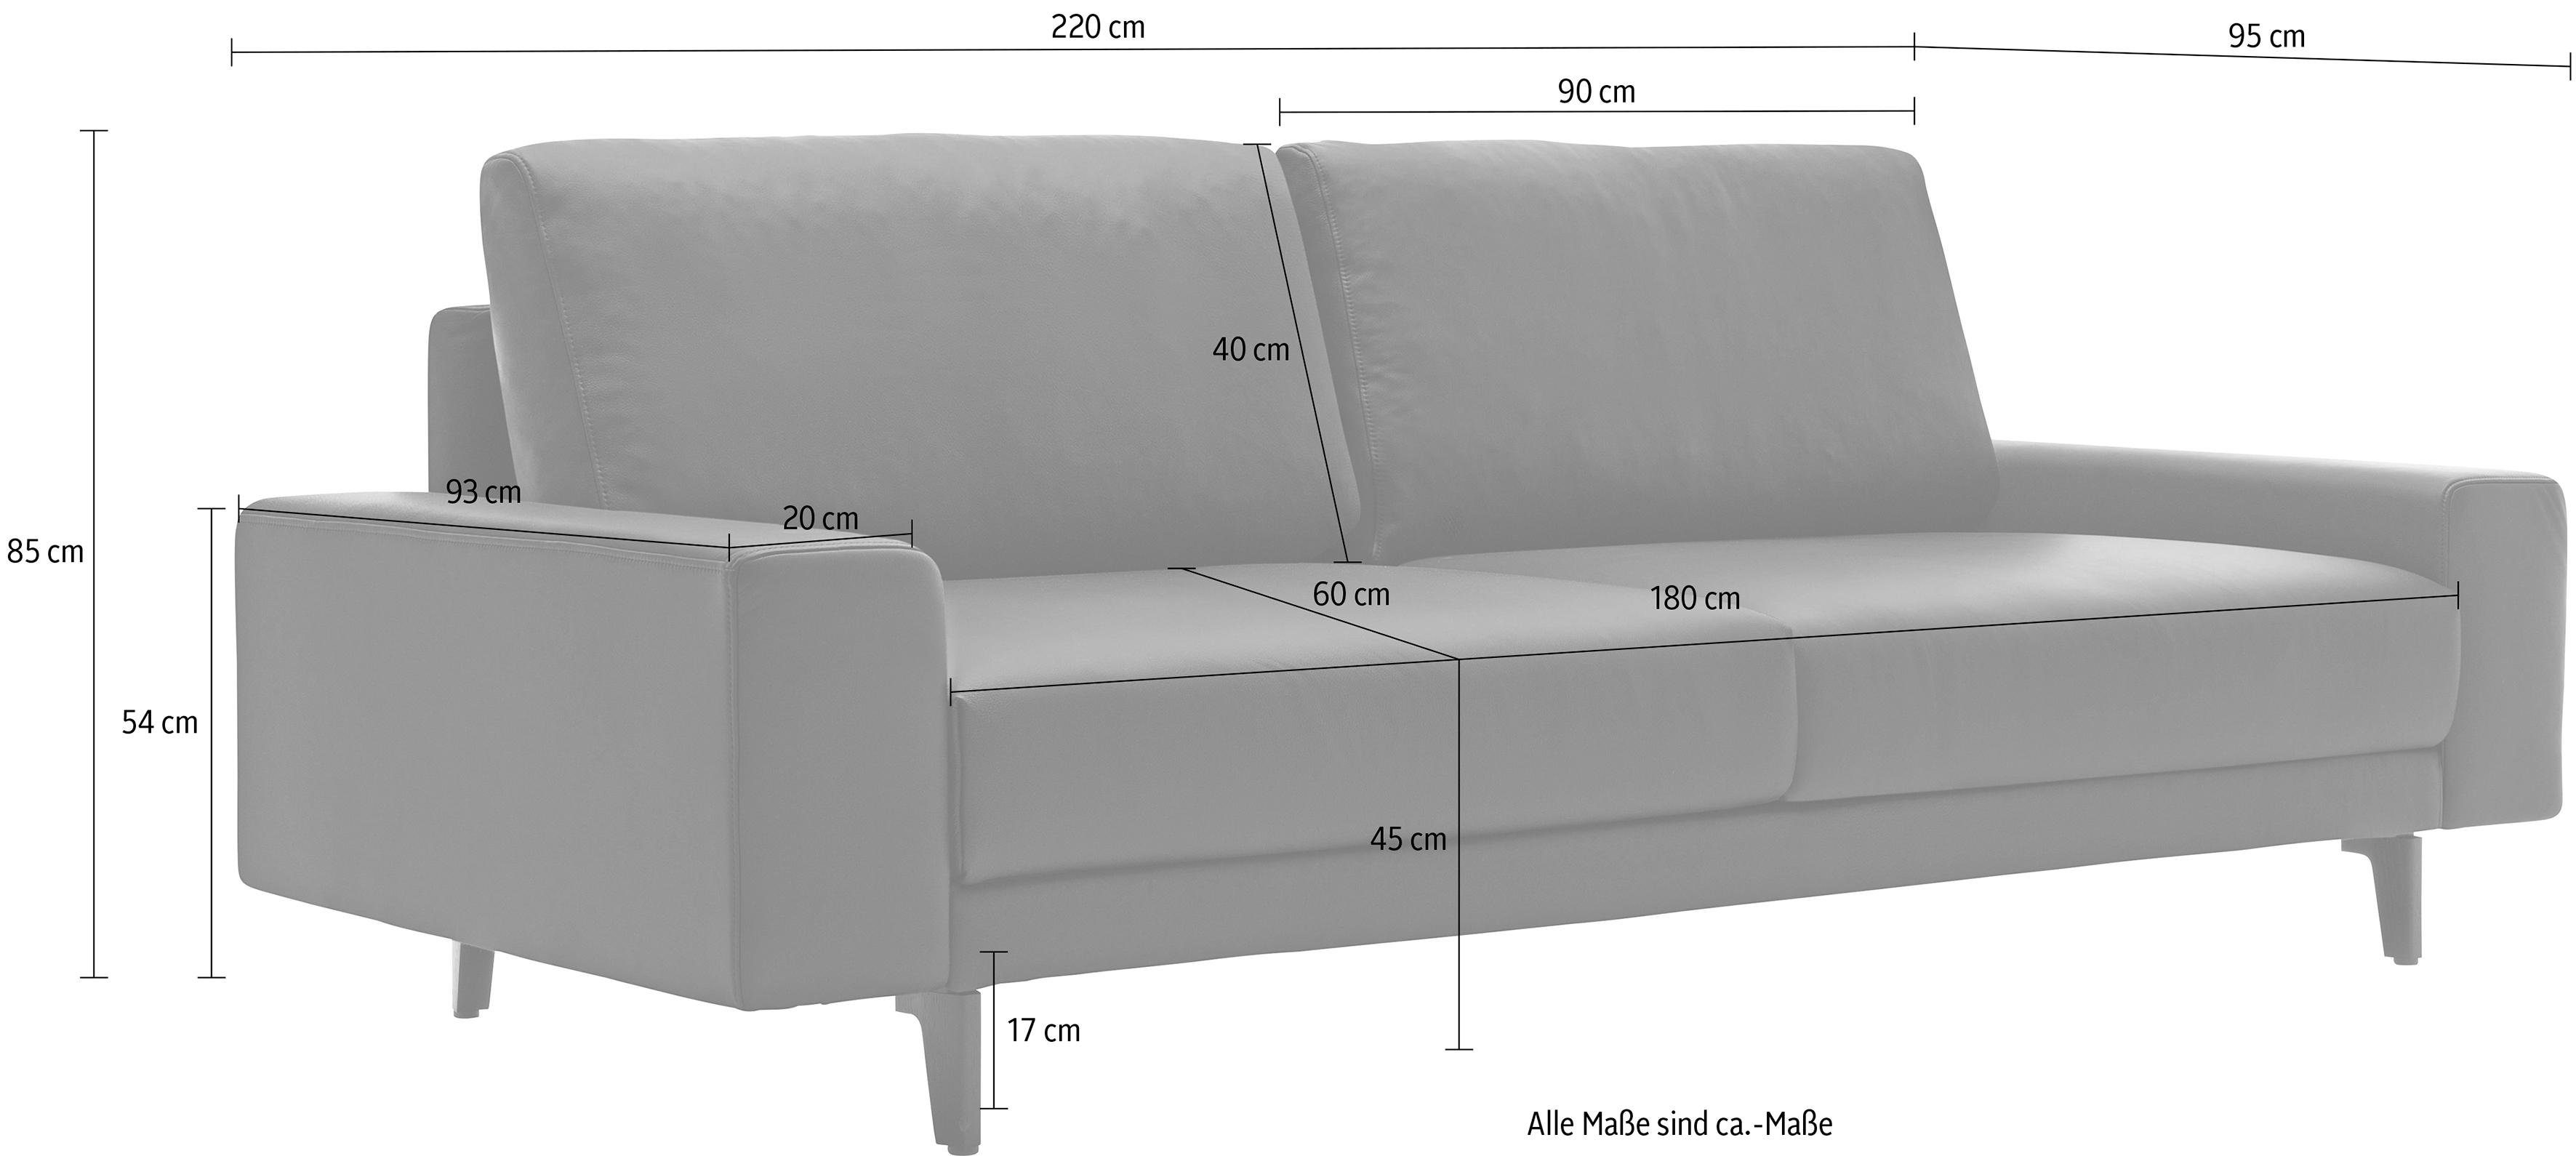 umbragrau, 220 Breite niedrig, in cm 3-Sitzer breit Armlehne hs.450, Alugussfüße sofa hülsta